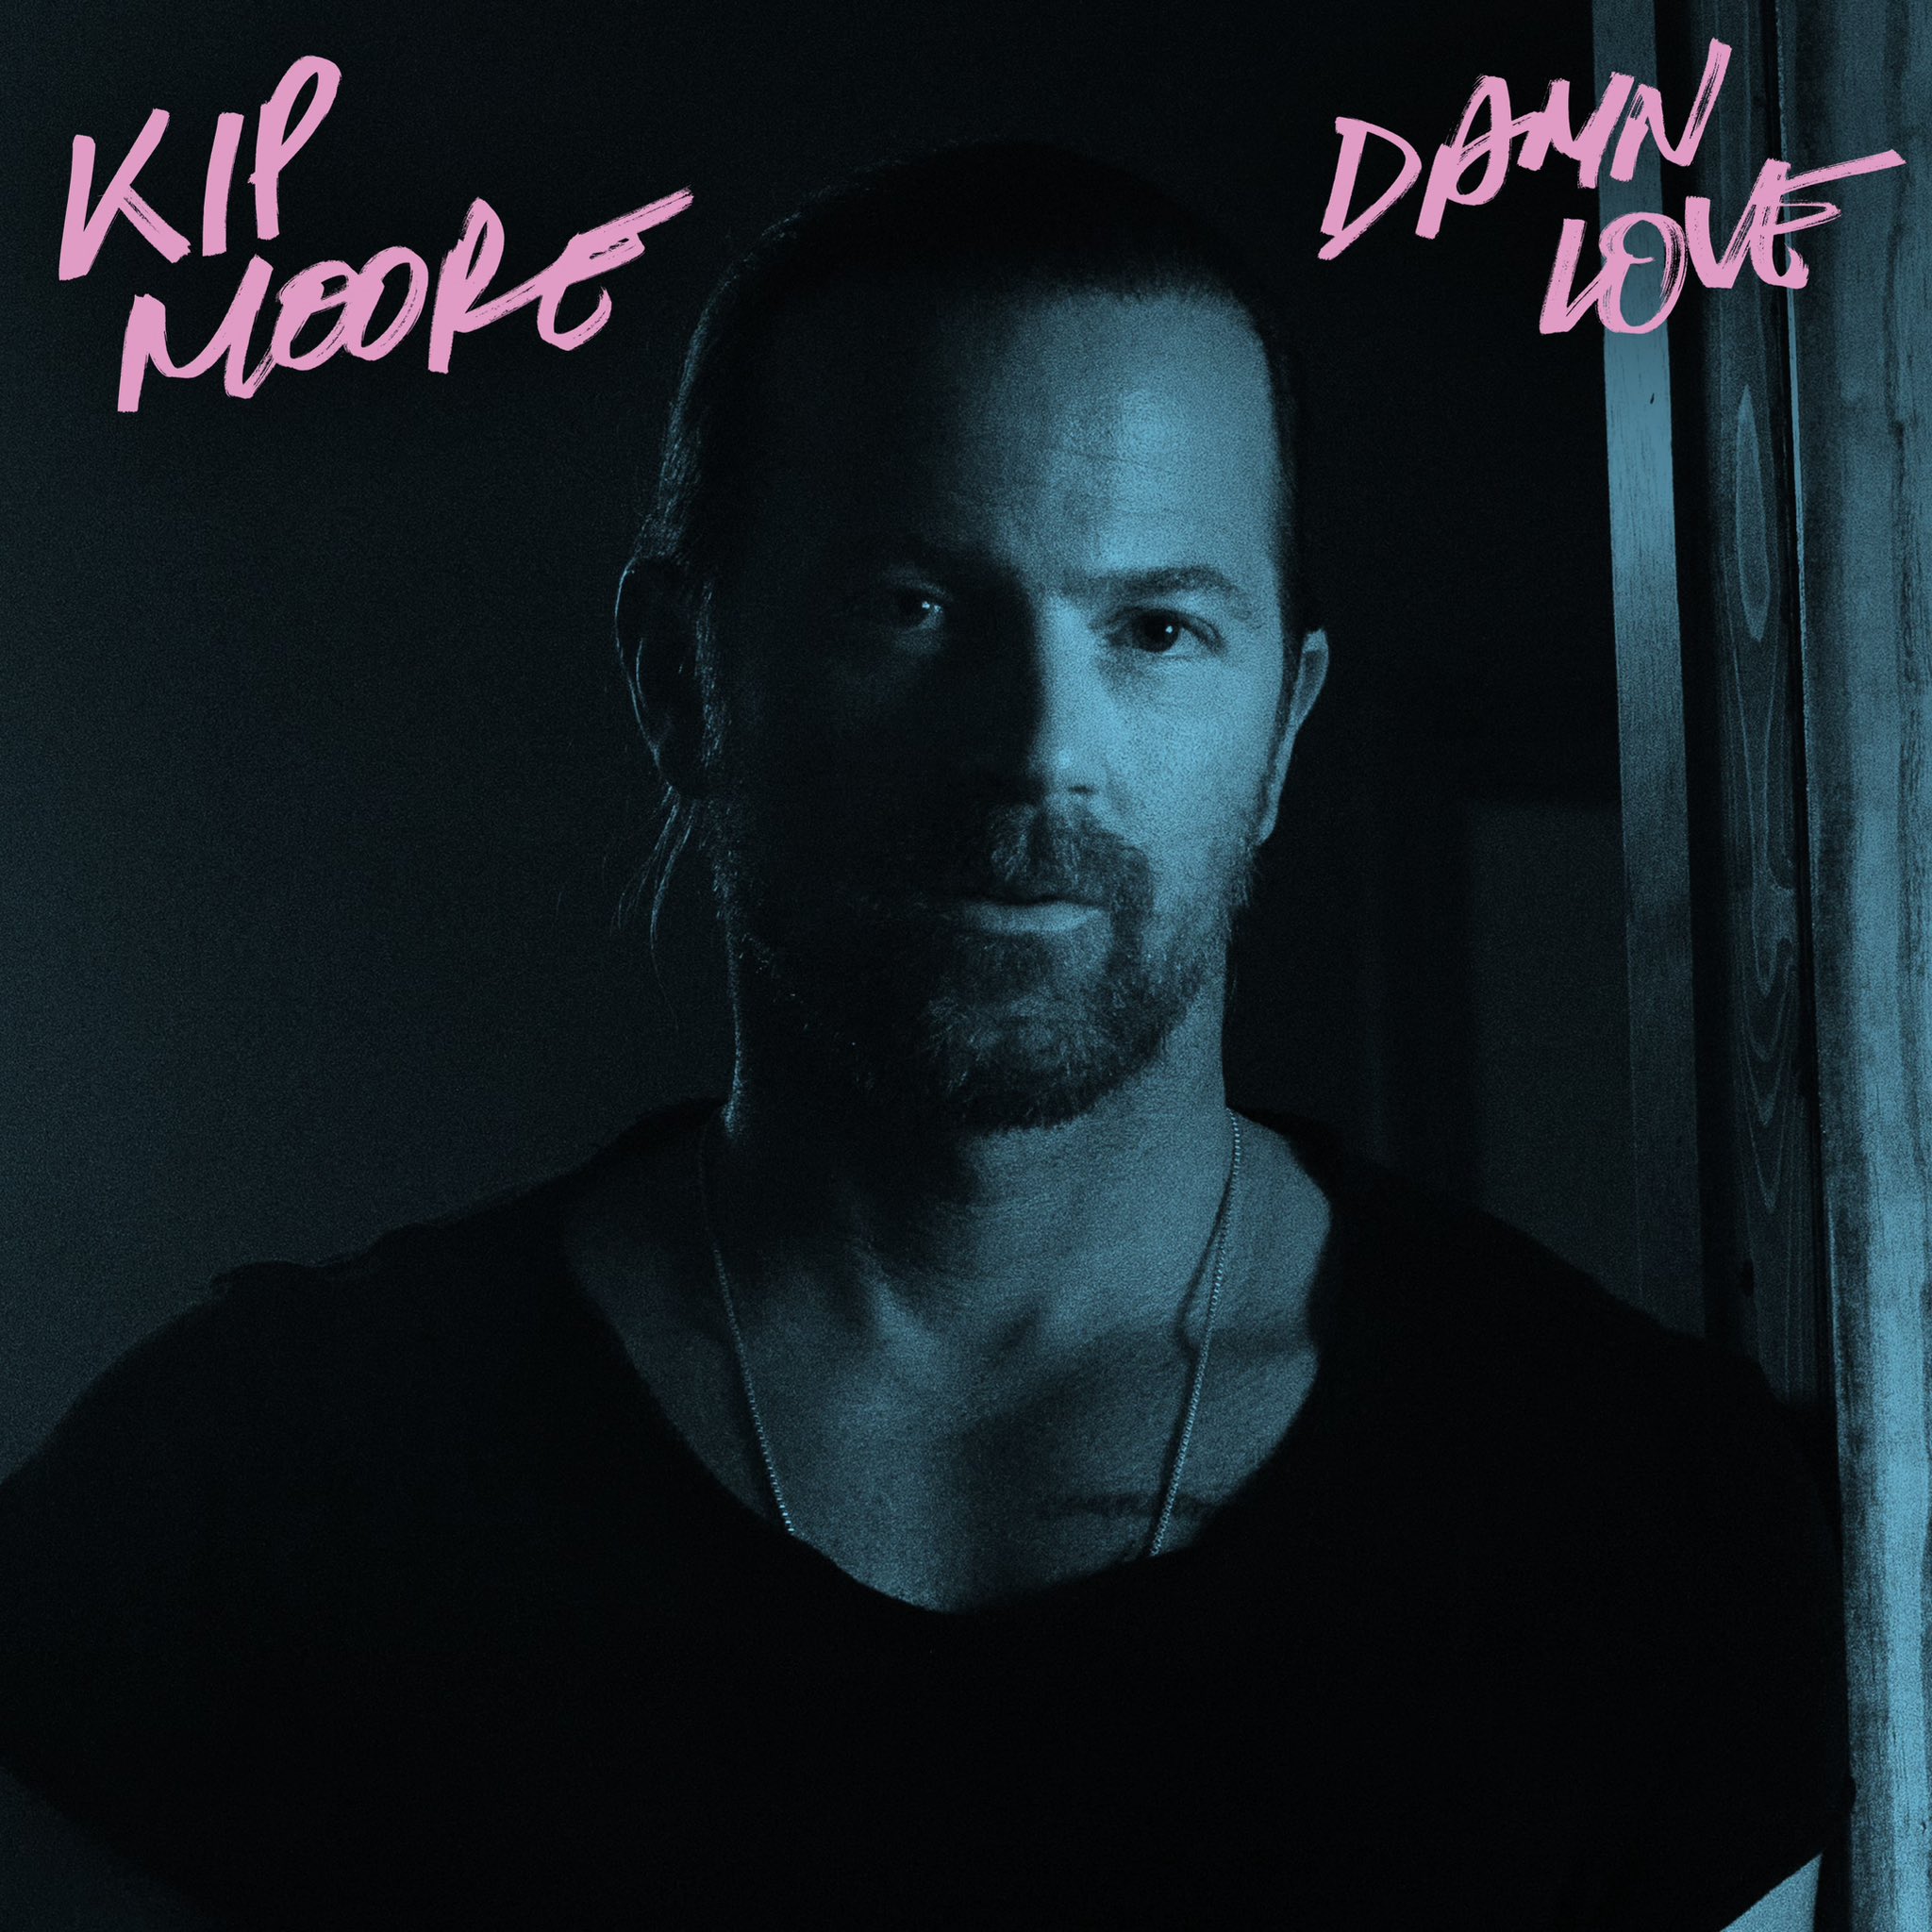 ALBUM REVIEW: Damn Love by Kip Moore